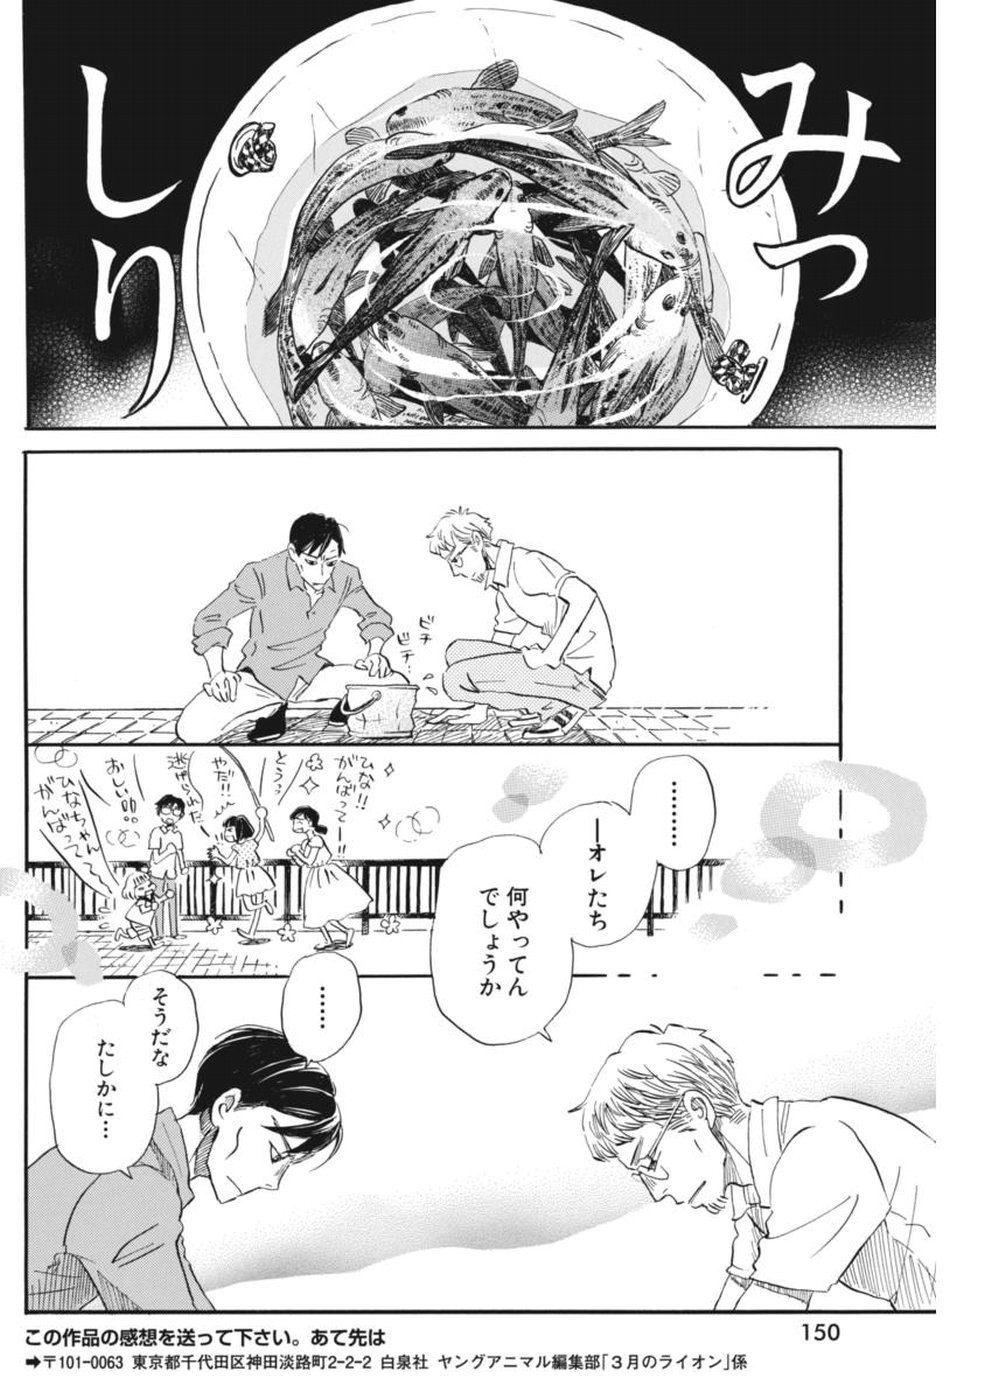 3 Gatsu no Lion - Chapter 144 - Page 10